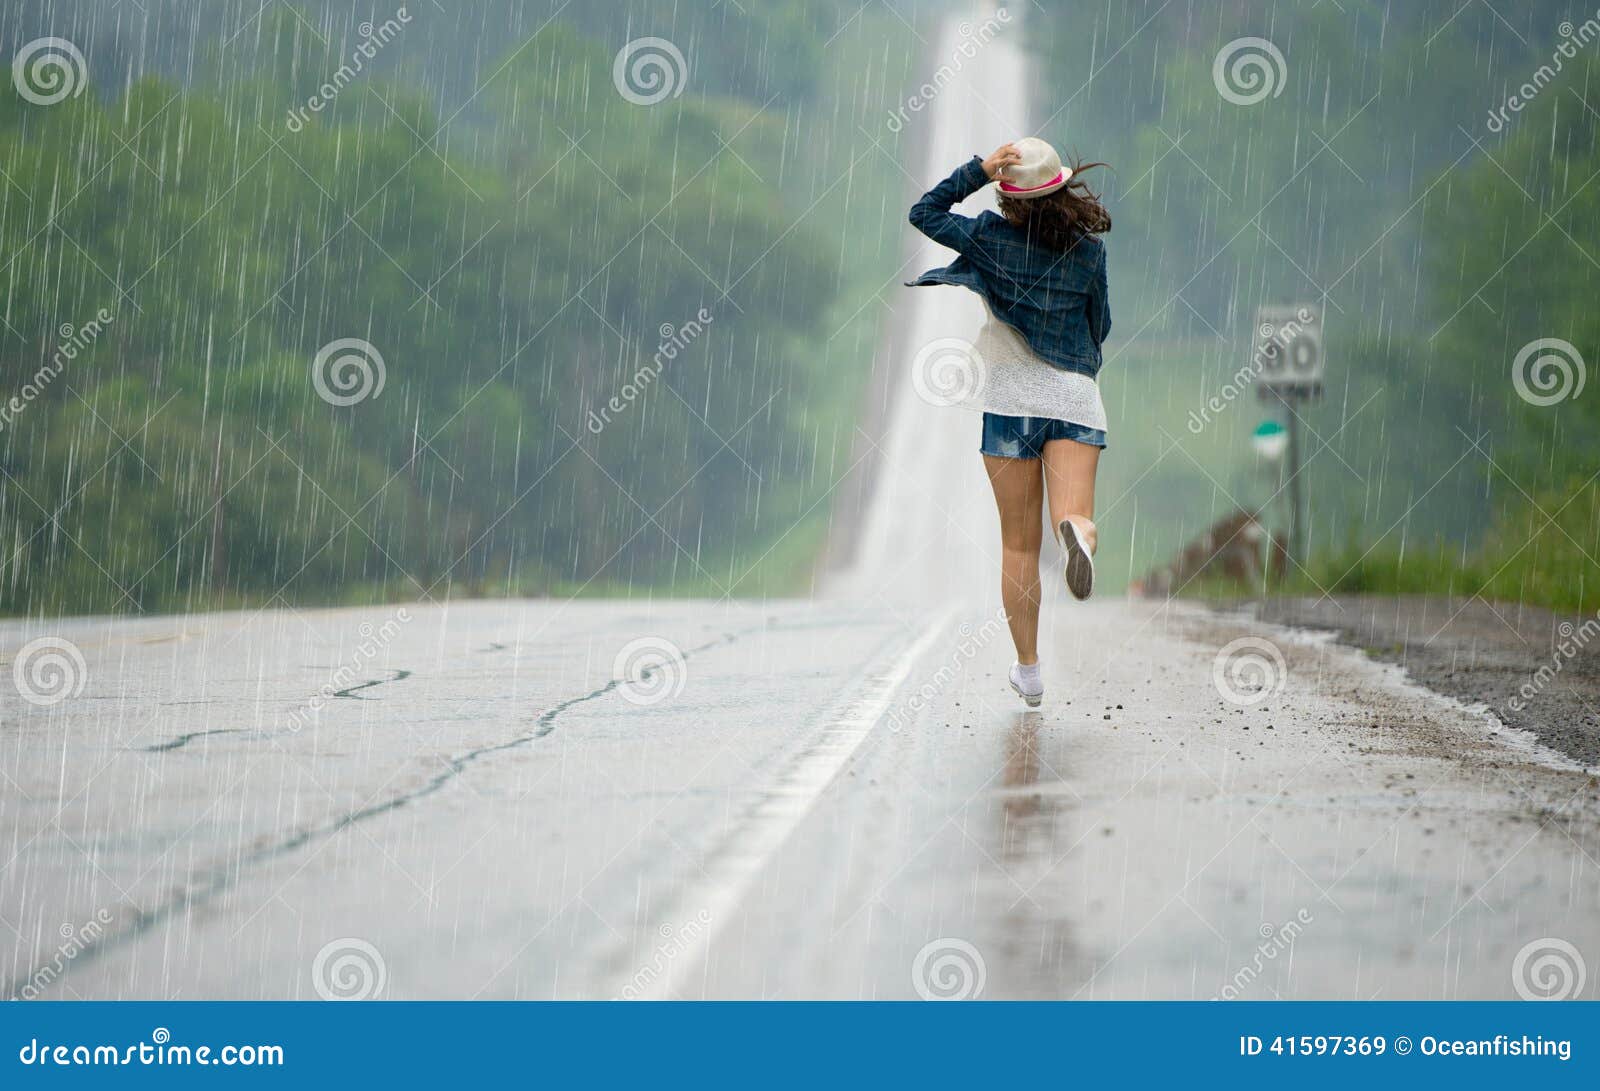 fredelig Undskyld mig Ugyldigt Running in the rain stock image. Image of adult, jogging - 41597369